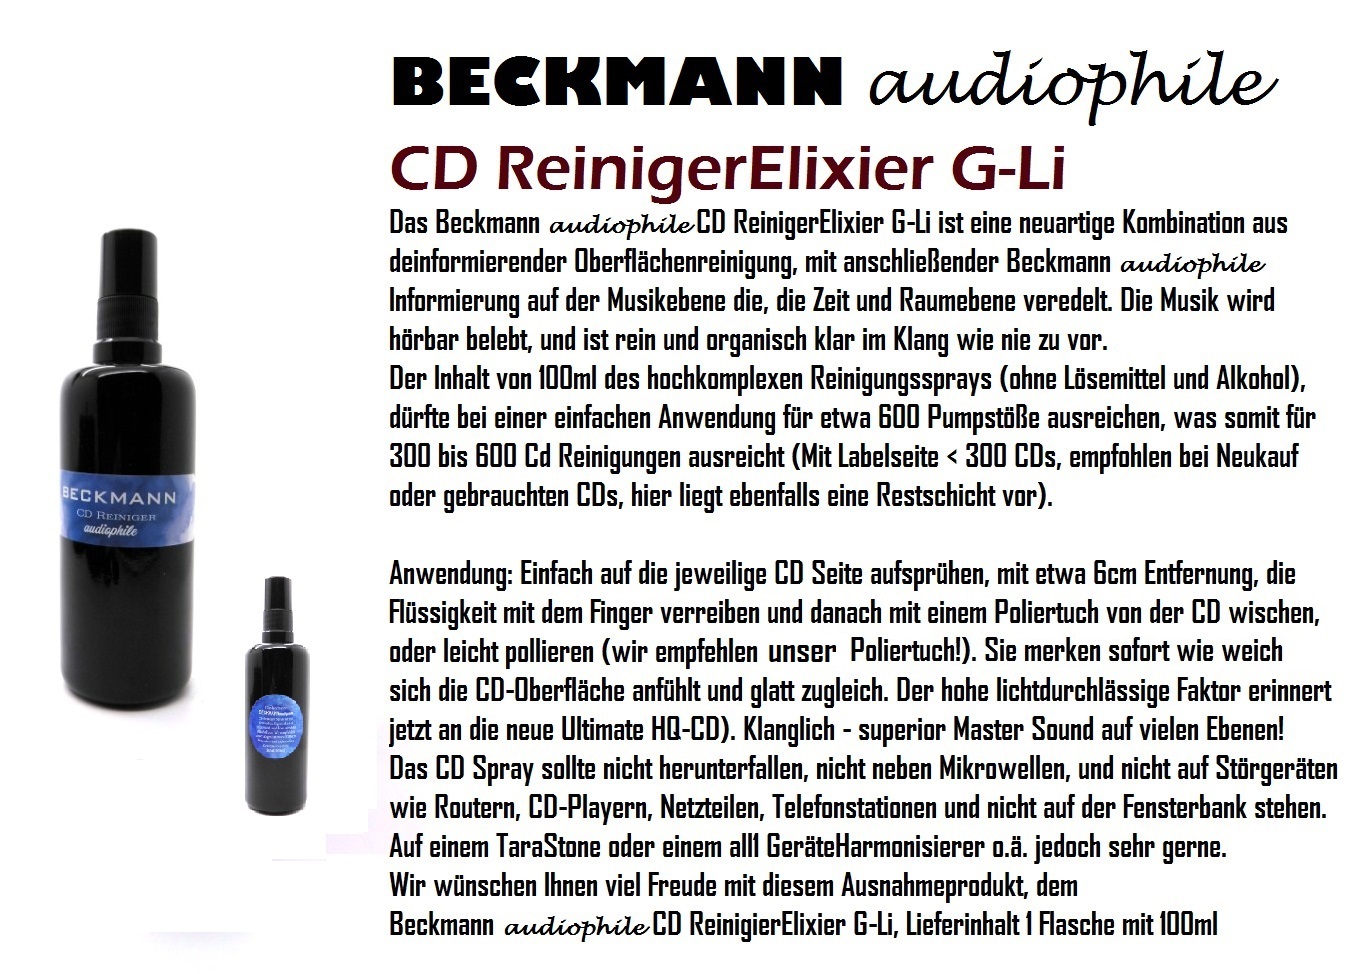 BECKMANN_audiophile_CD_Spray_G-Li_black,_durchdringt_und_reinigt_jede_CD_mit_wundervollem_Klang